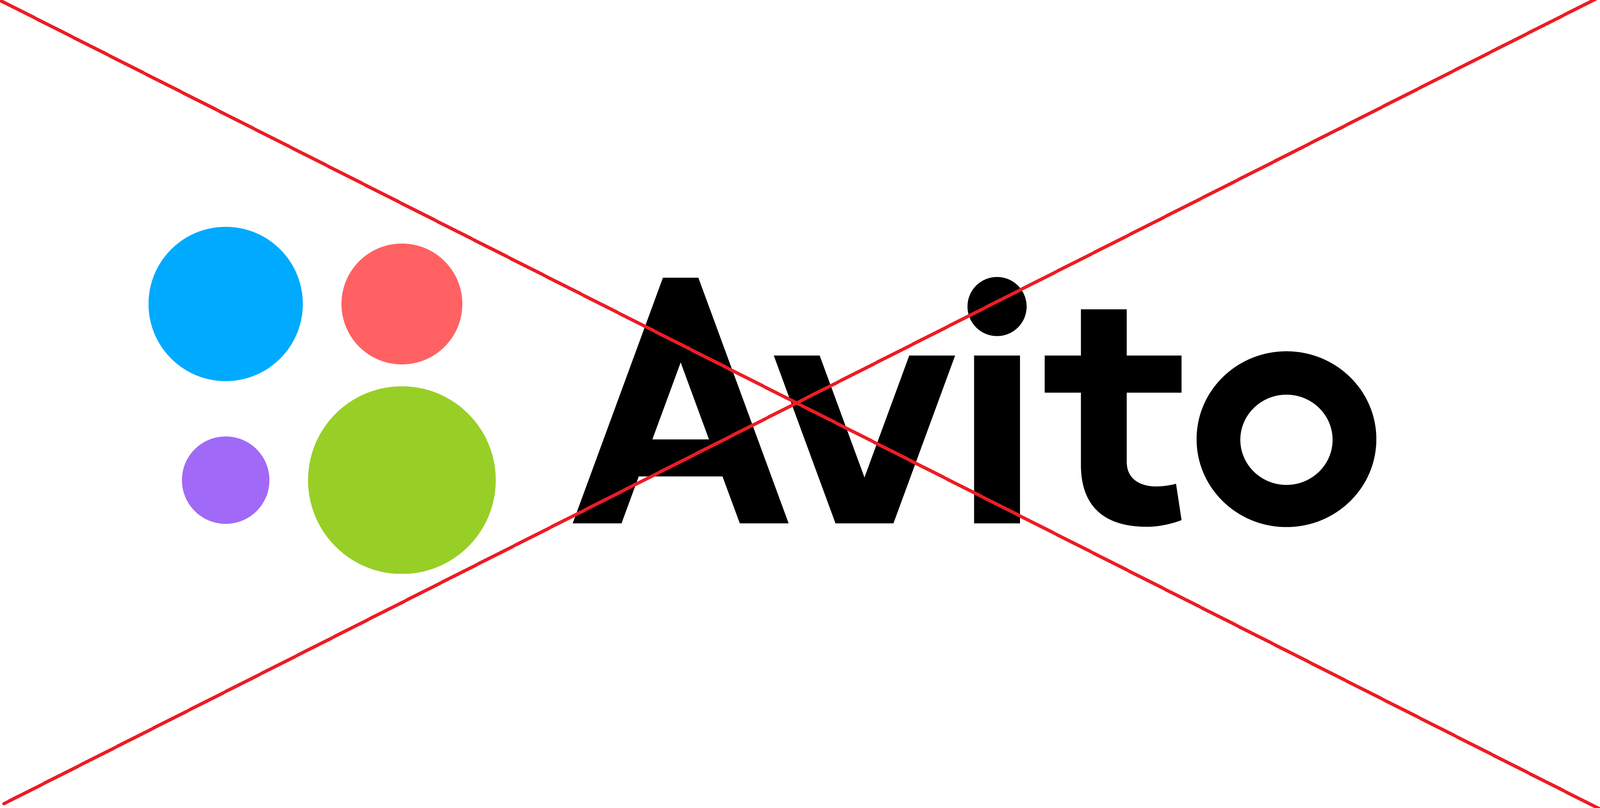 J fdbnj. Avito эмблема. Avito логотип прозрачный. Логотип компании авито. Авито натпрозрачном фоне.